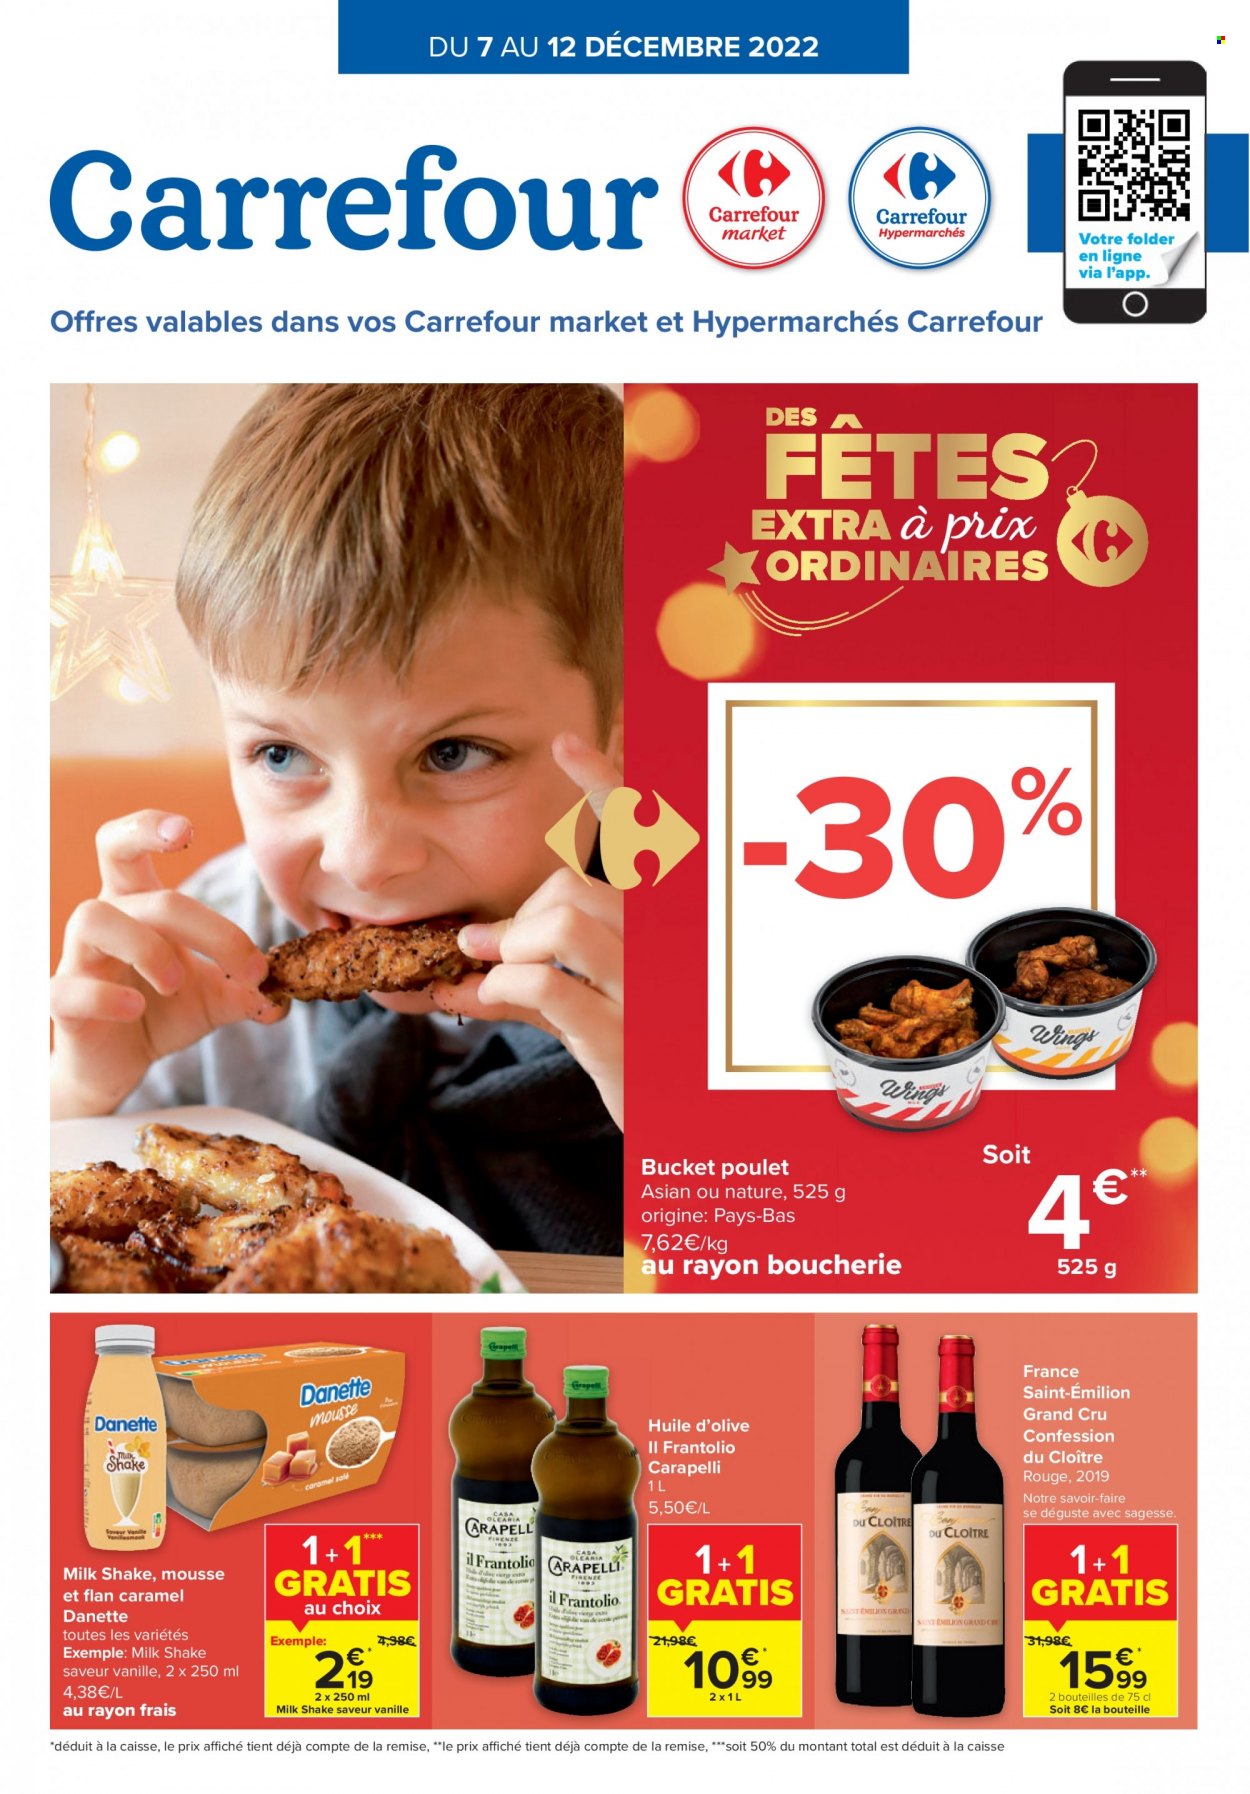 thumbnail - Carrefour-aanbieding - 07/12/2022 - 12/12/2022 -  producten in de aanbieding - Danette. Pagina 1.